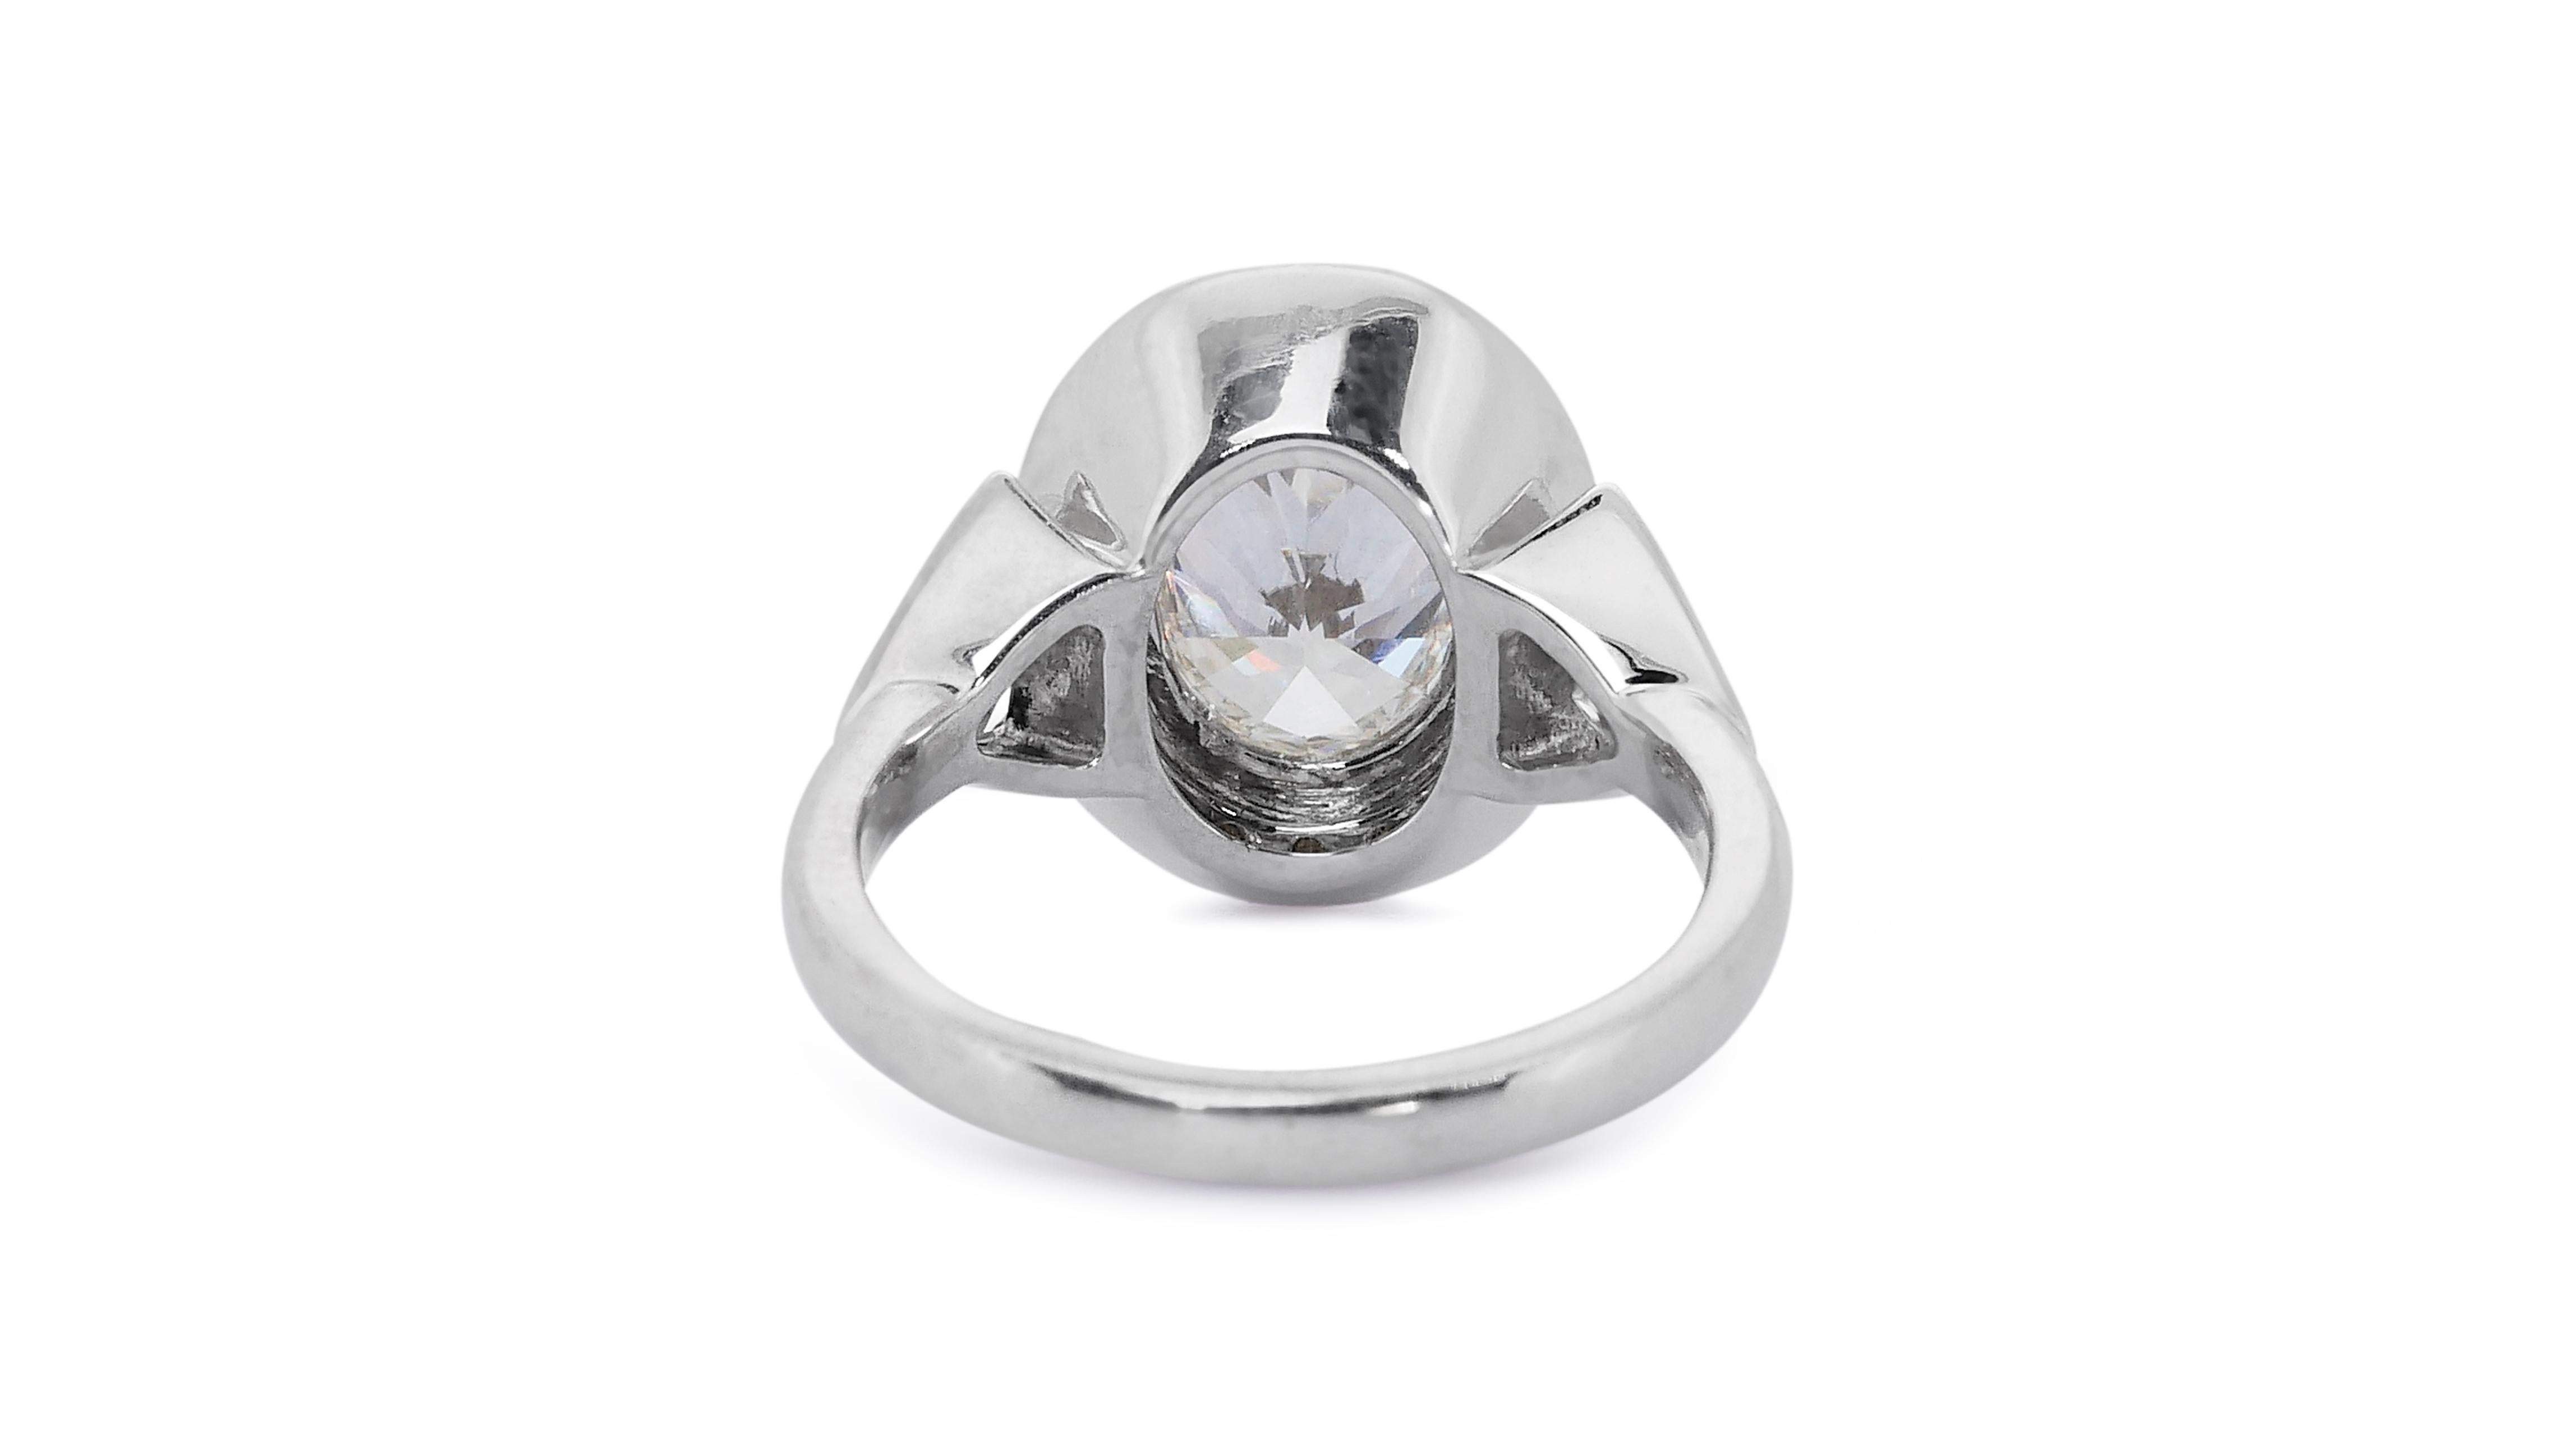 Ravishing 18k White Gold Oval Ring w/ 1.90ct Natural Diamonds IGI Certificate For Sale 3